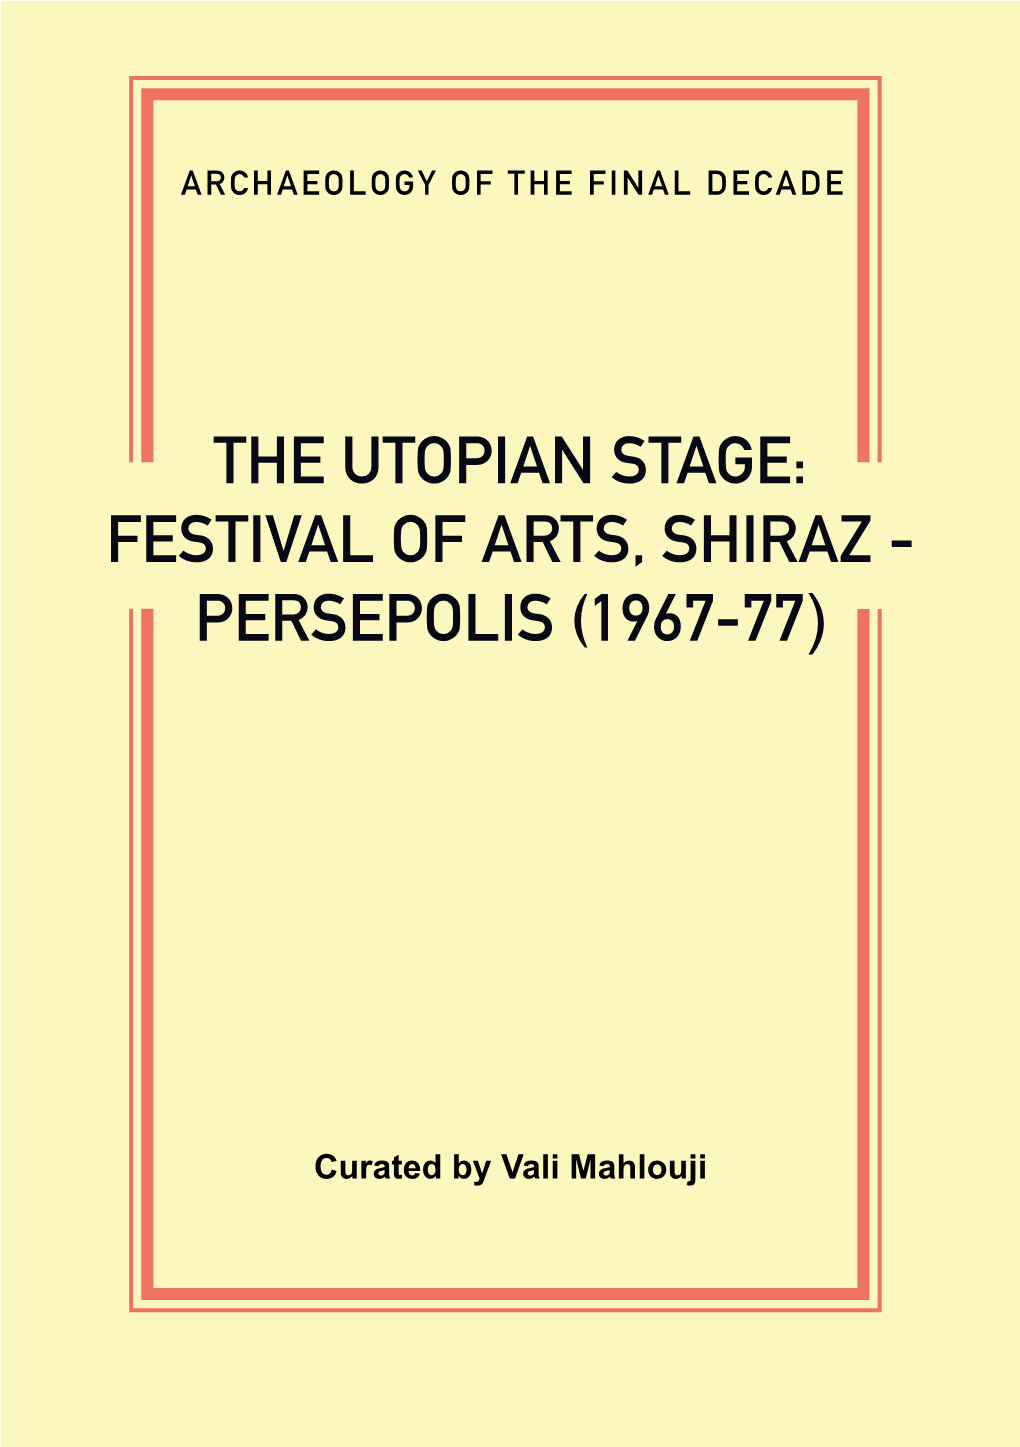 The Utopian Stage: Festival of Arts, Shiraz - Persepolis (1967-77)